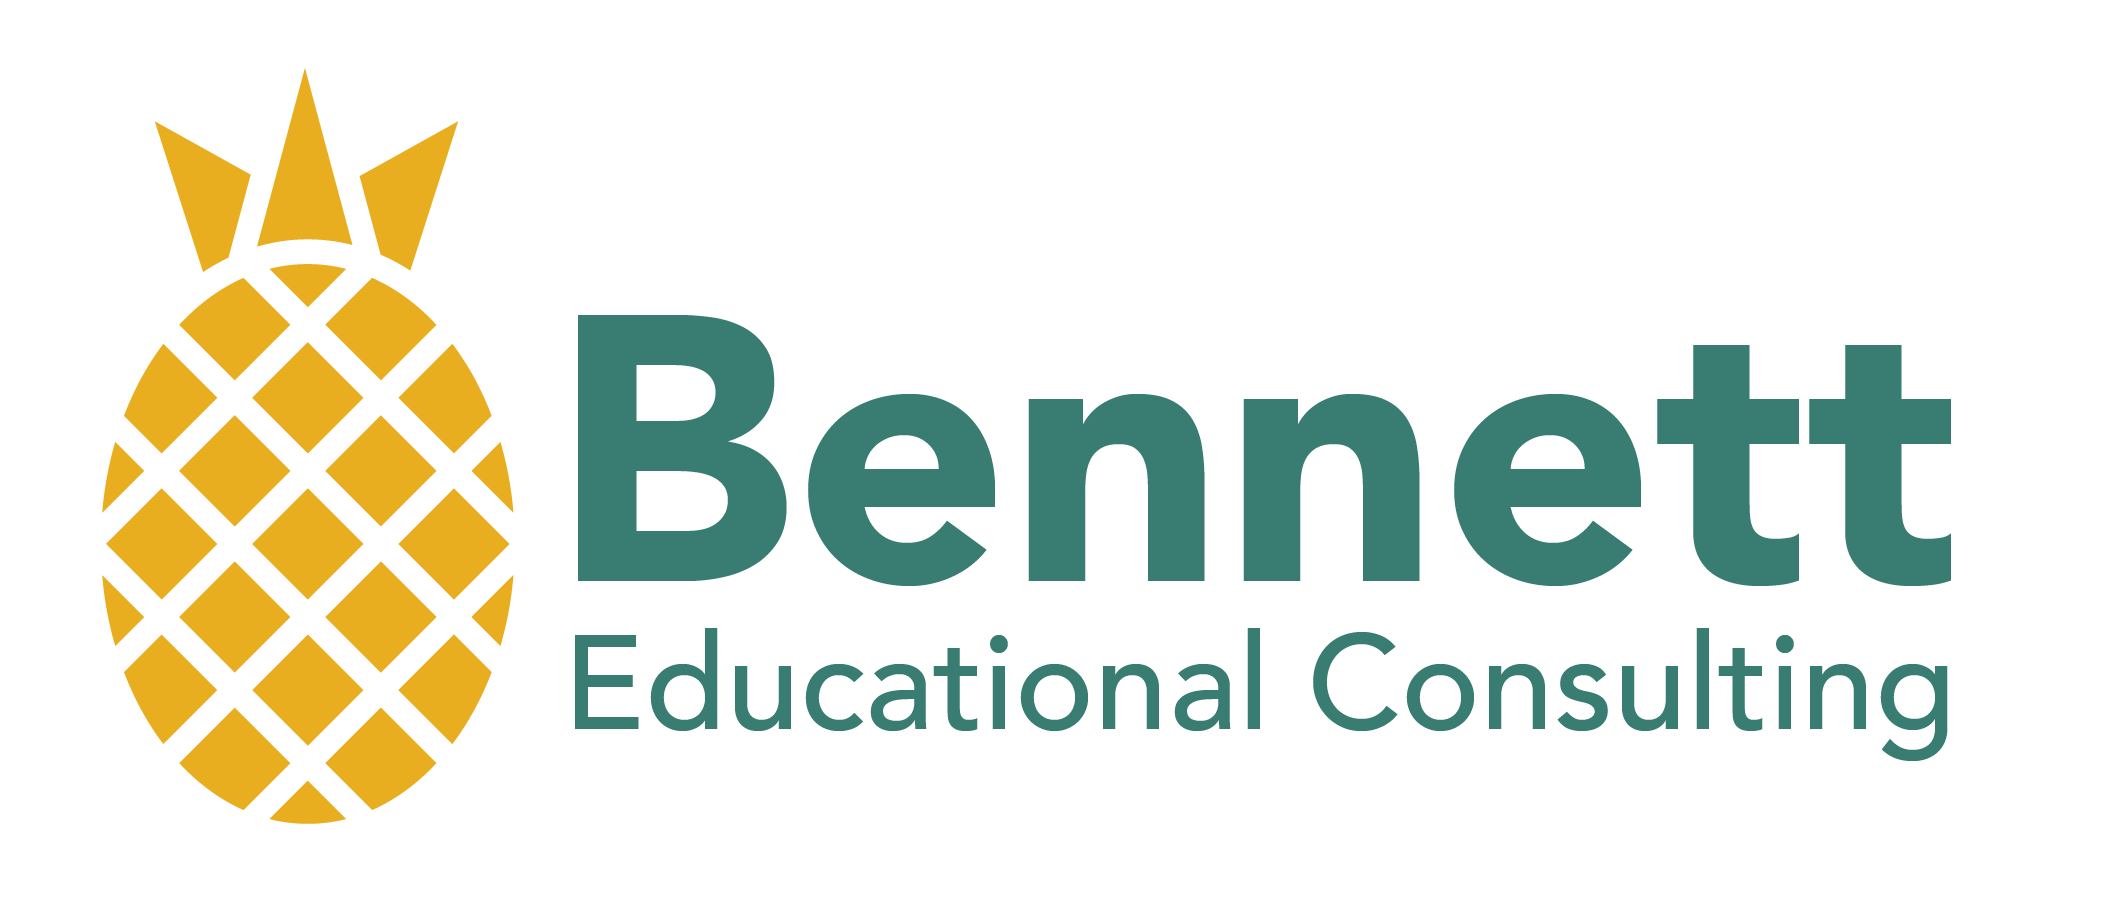 Bennett Educational Consulting